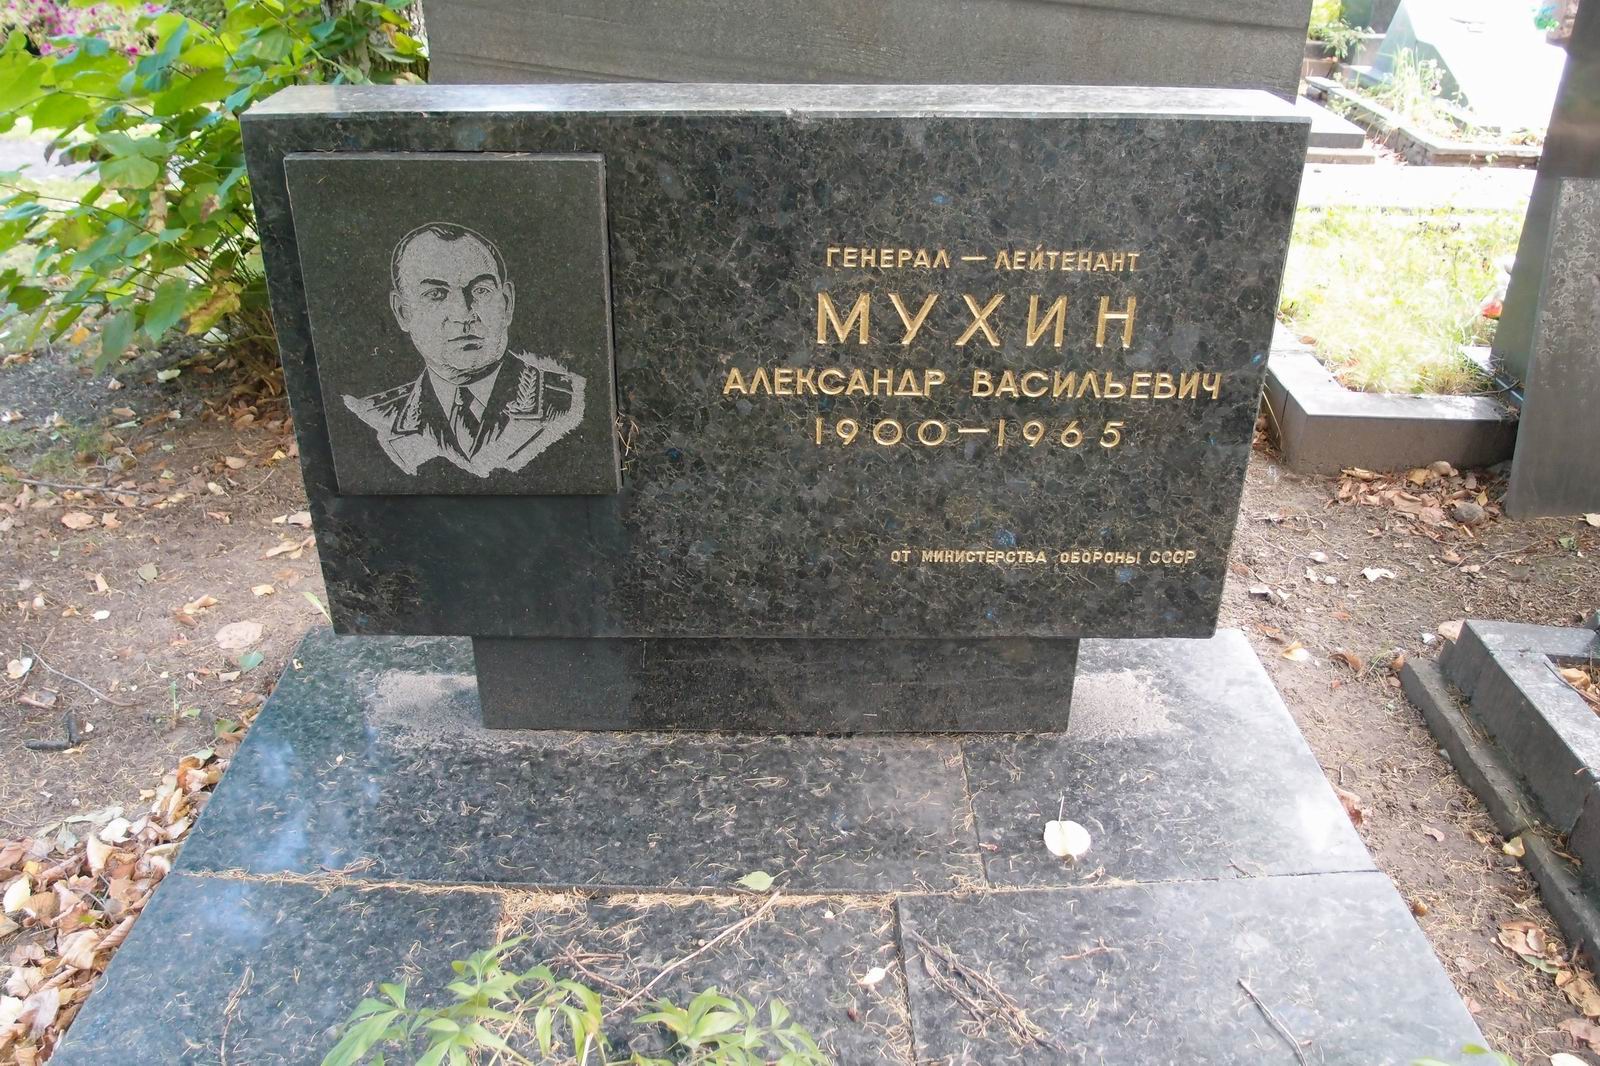 Памятник на могиле Мухина А.В. (1900-1965), на Новодевичьем кладбище (6-26-1).